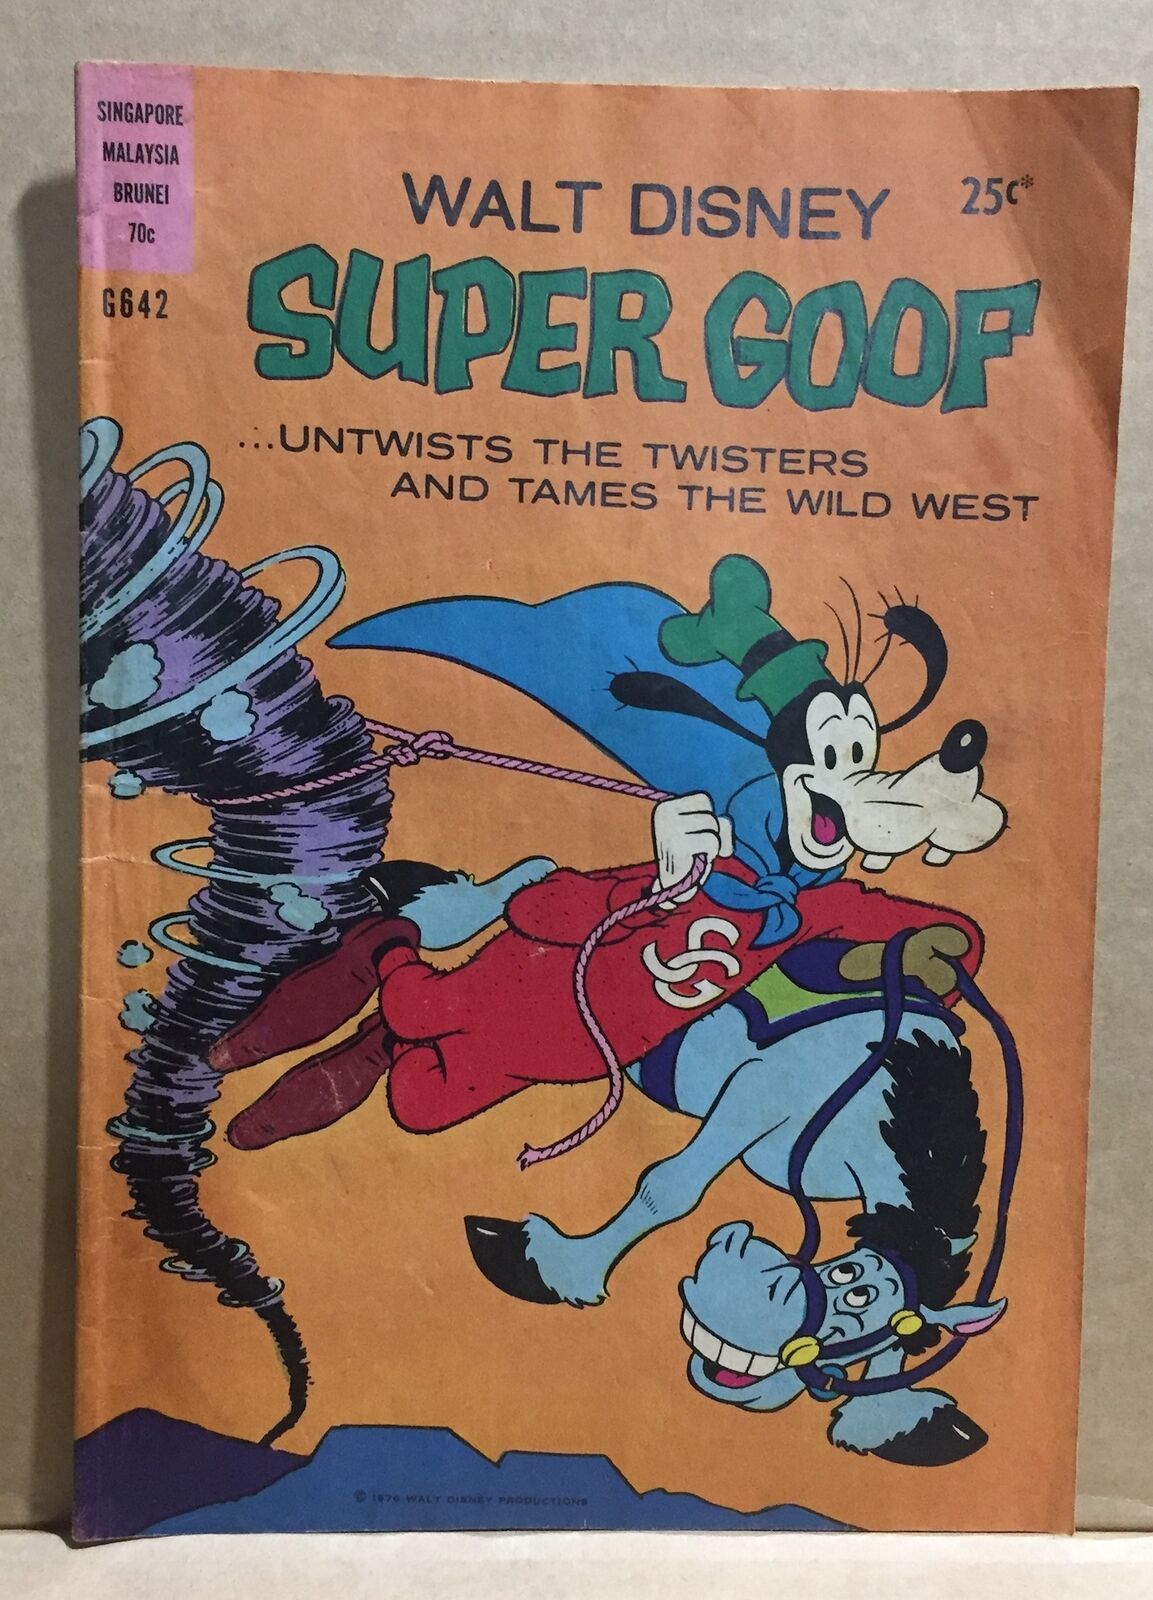 WALT DISNEY COMIC BOOK - SUPER GOOF G642 australian